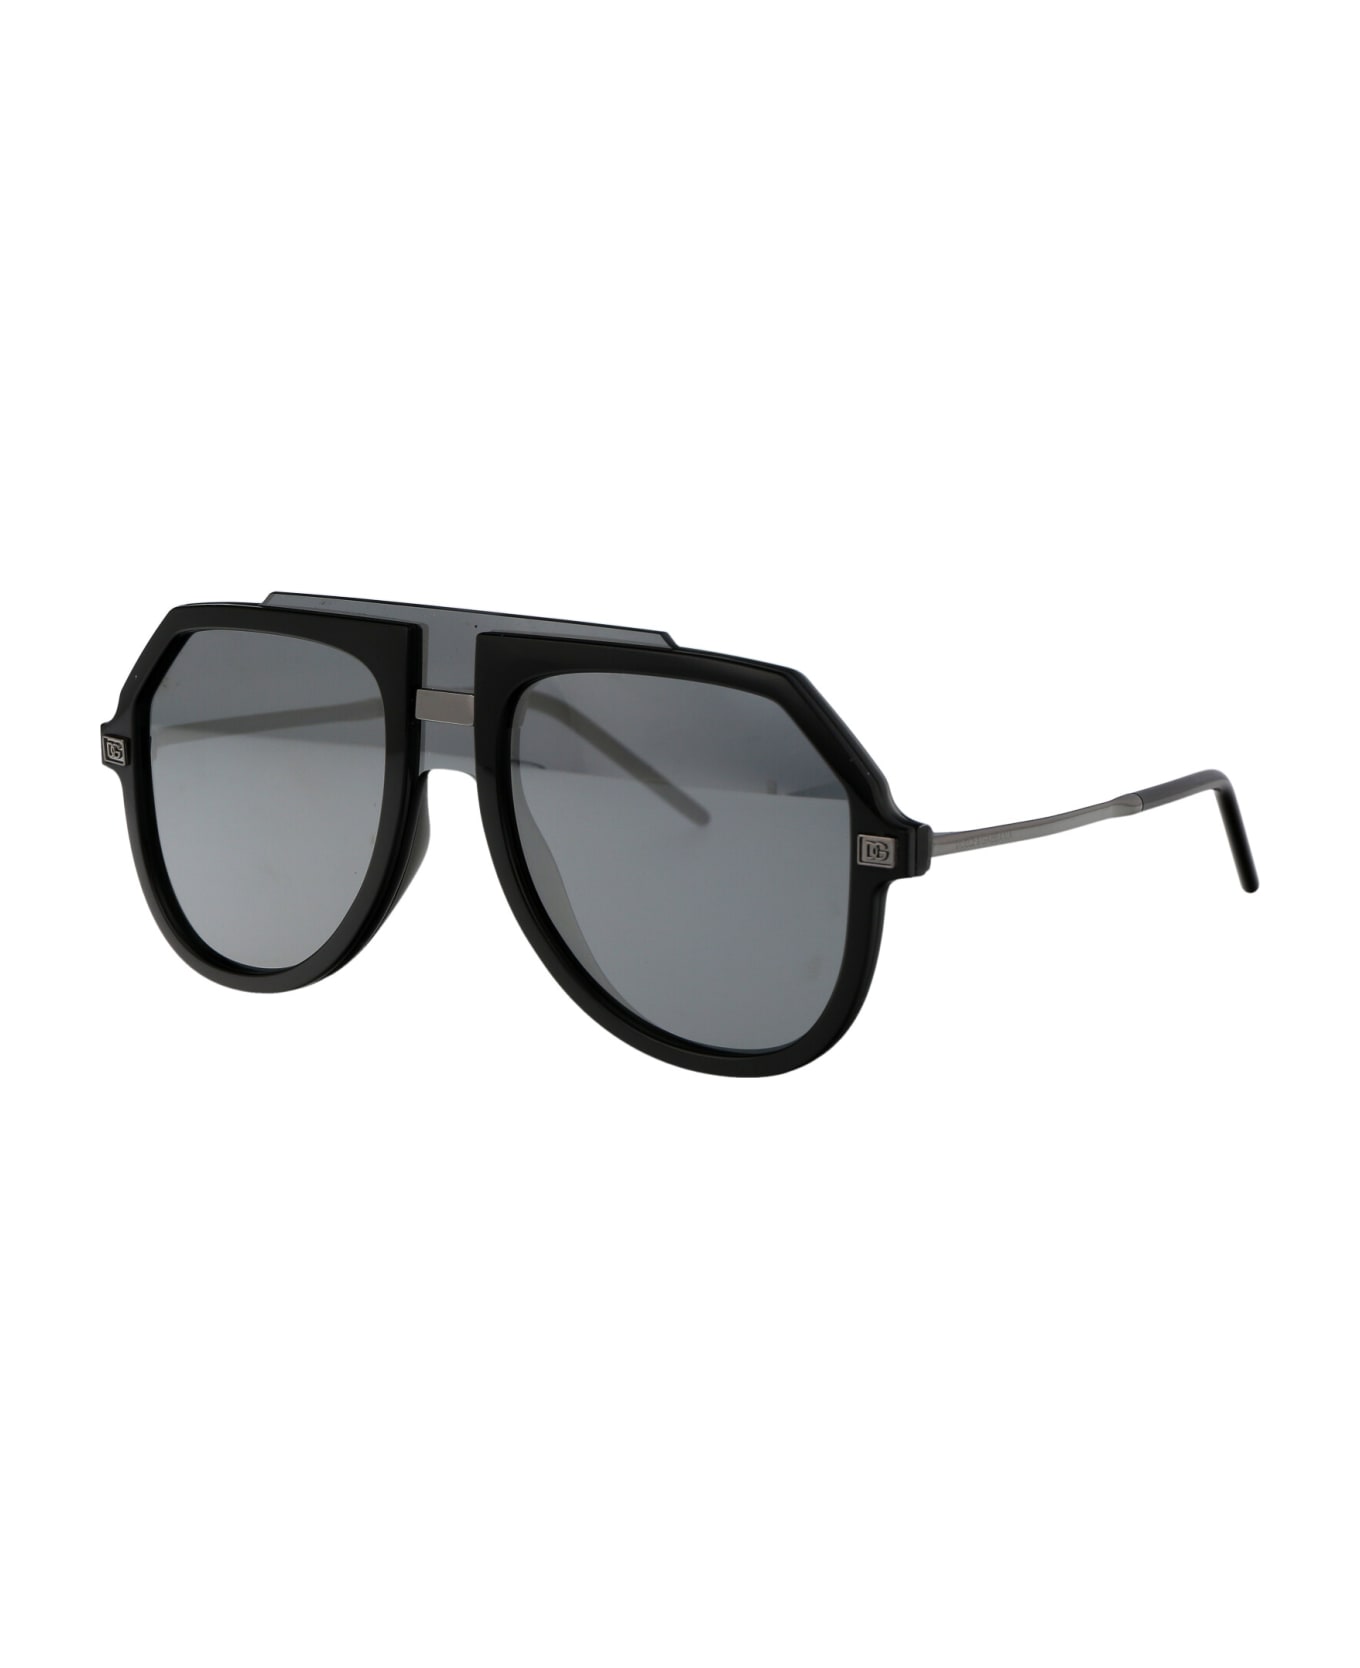 Dolce & Gabbana Eyewear 0dg6195 Sunglasses - 501/6G BLACK サングラス